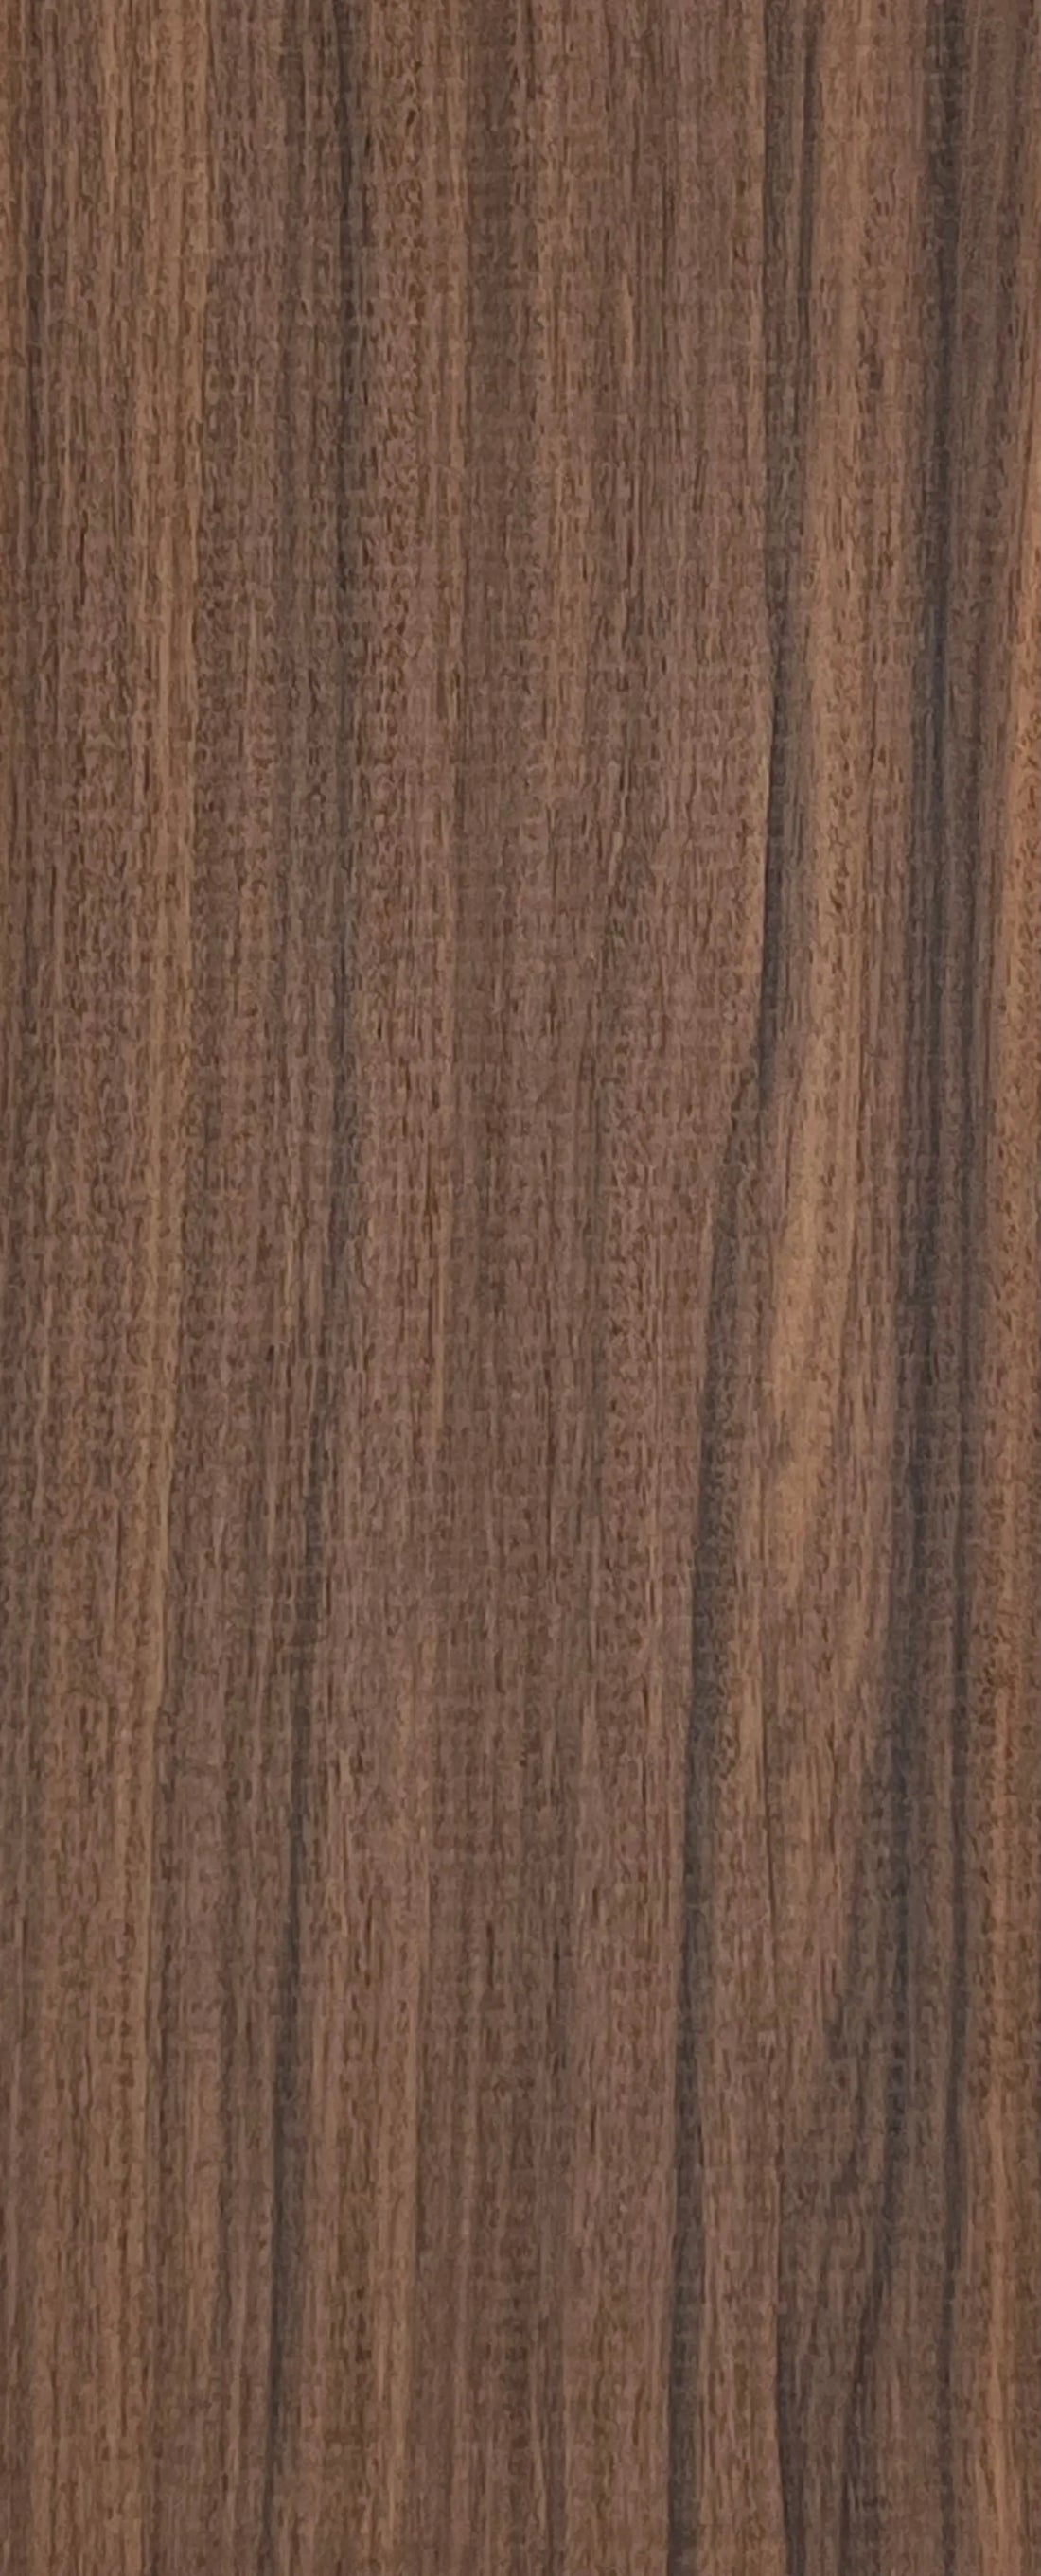 Santos Rosewood / Morado Thin Stock Lumber Boards Wood Crafts - Exotic Wood Zone - Buy online Across USA 